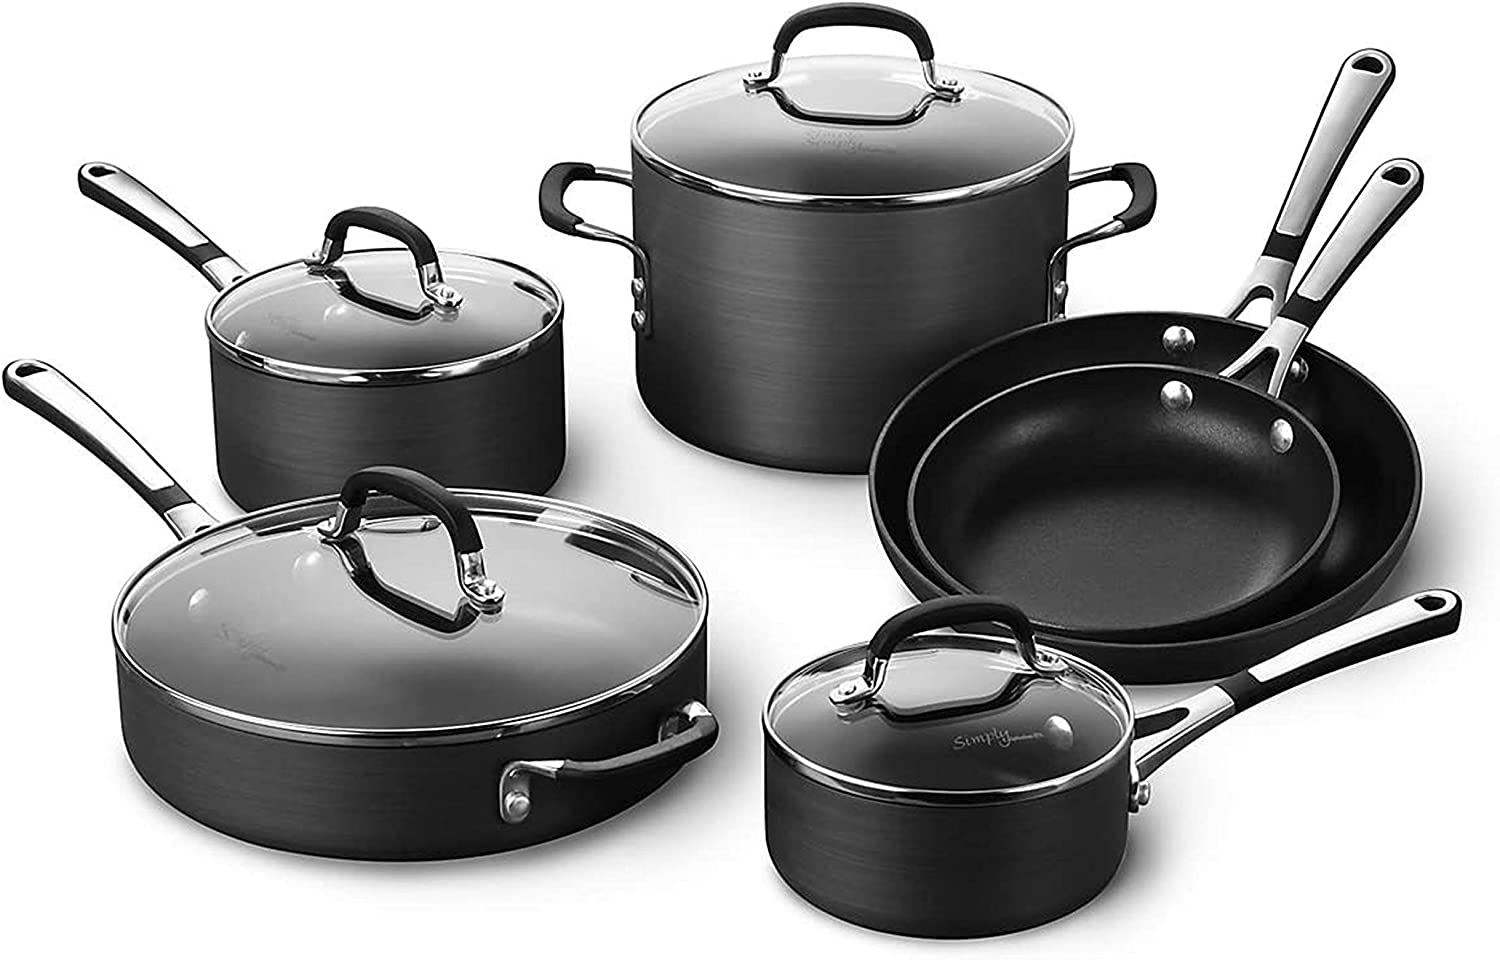  Pots and Pans Set - Nonstick Kitchen Cookware +